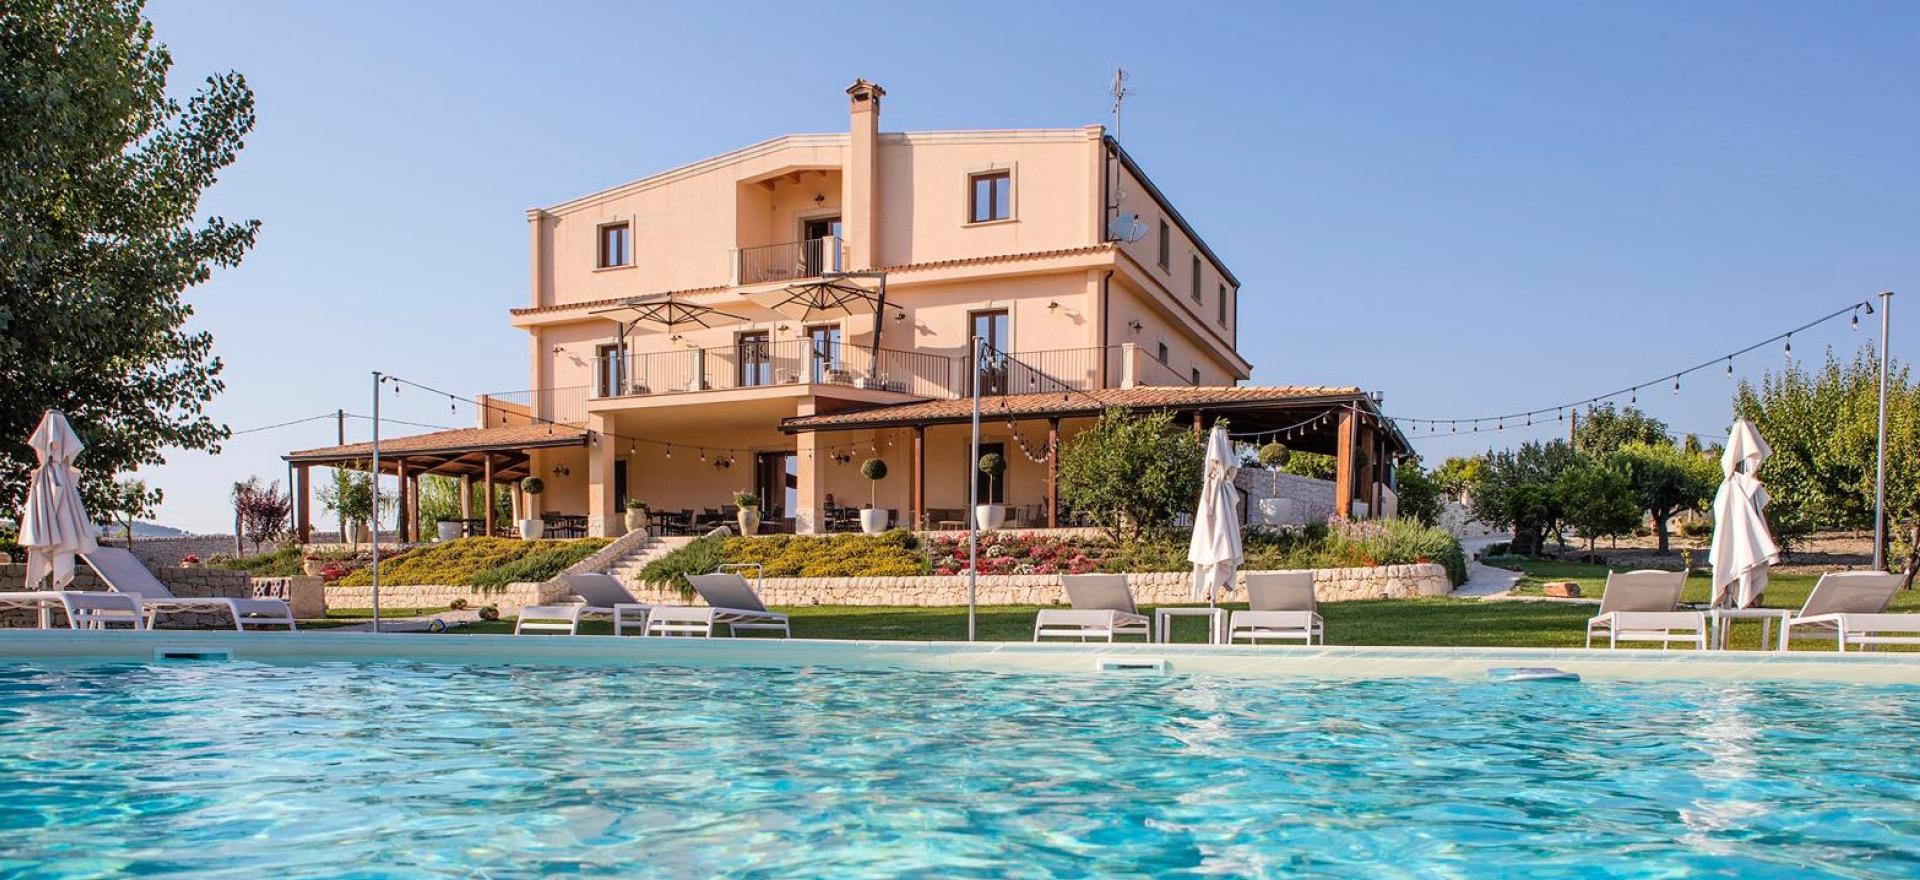 Kindvriendelijke agriturismo Sicilië met prachtig zwembad